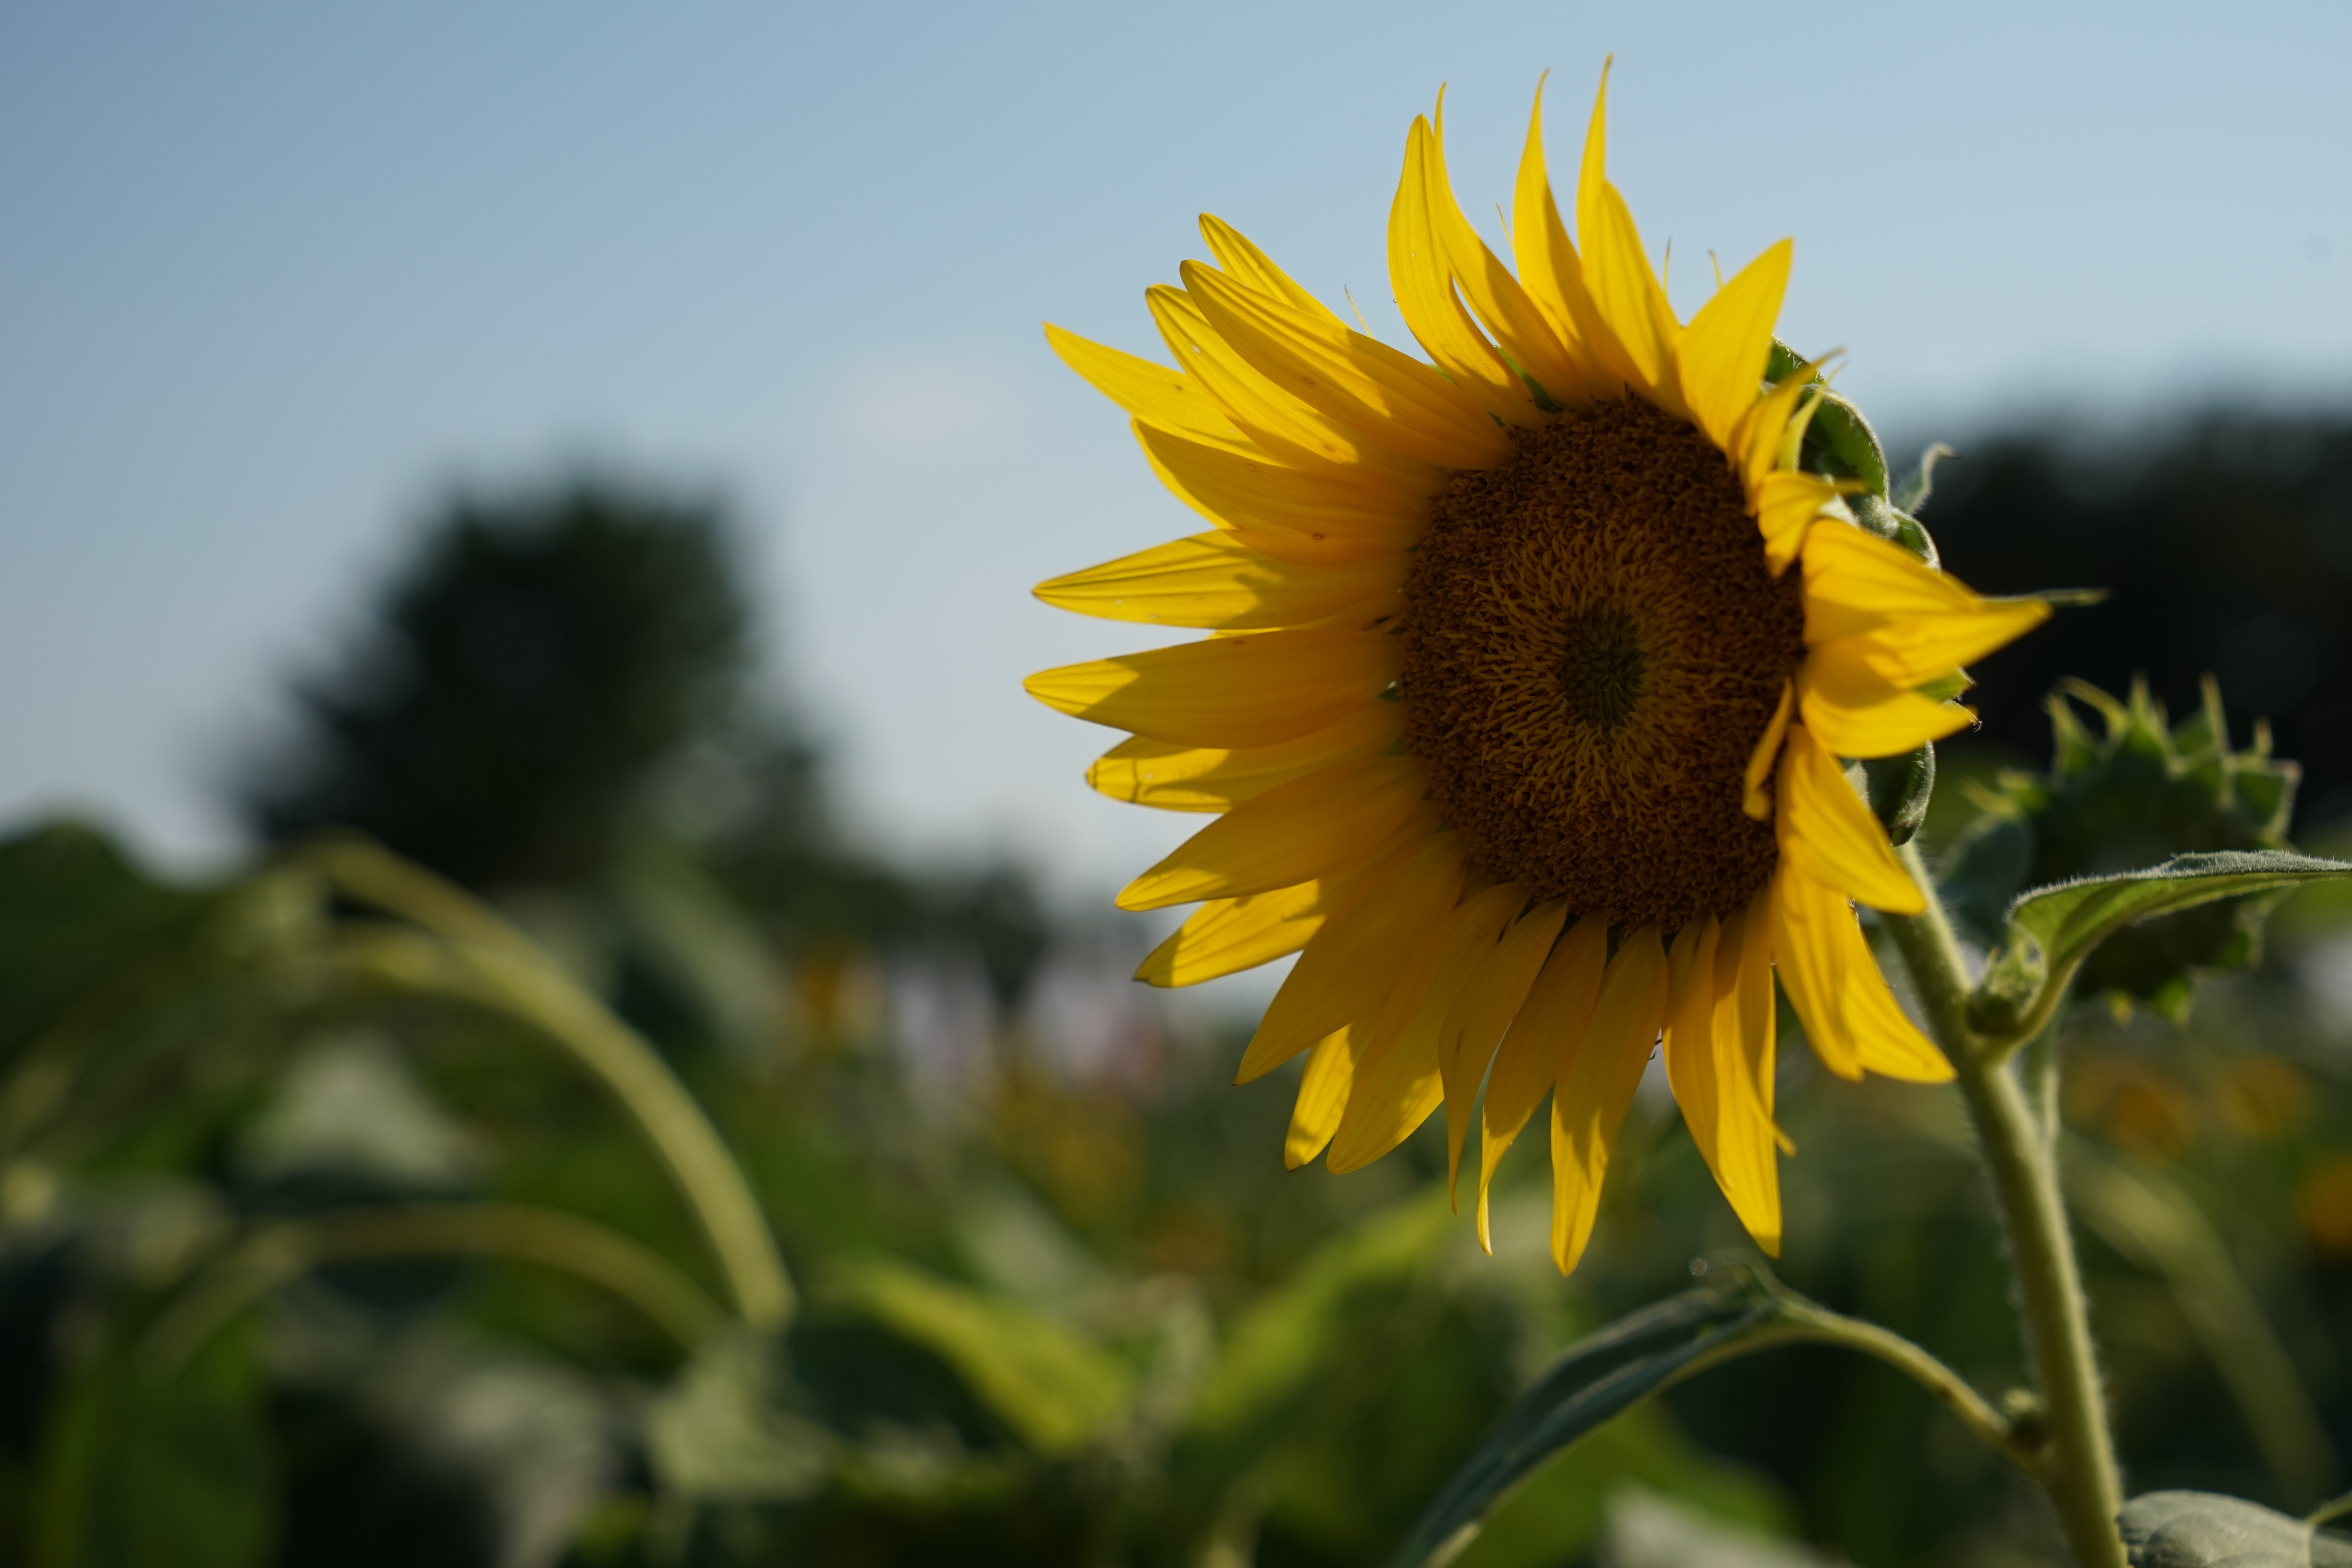 shallow focus photo of sunflower